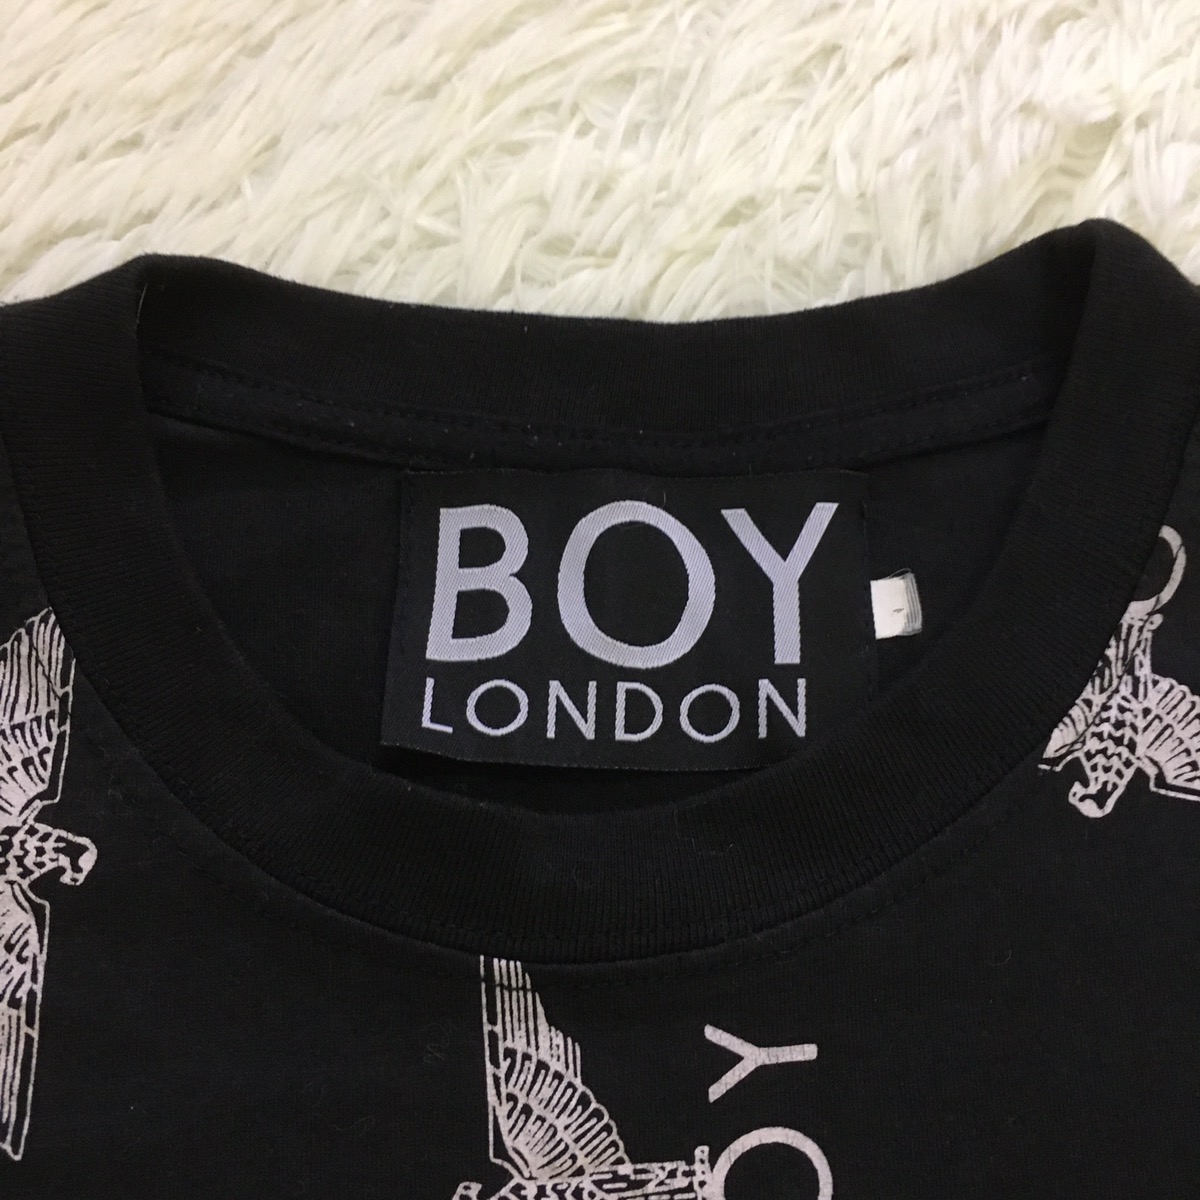 Boy London - Boy London All Over Print Tee